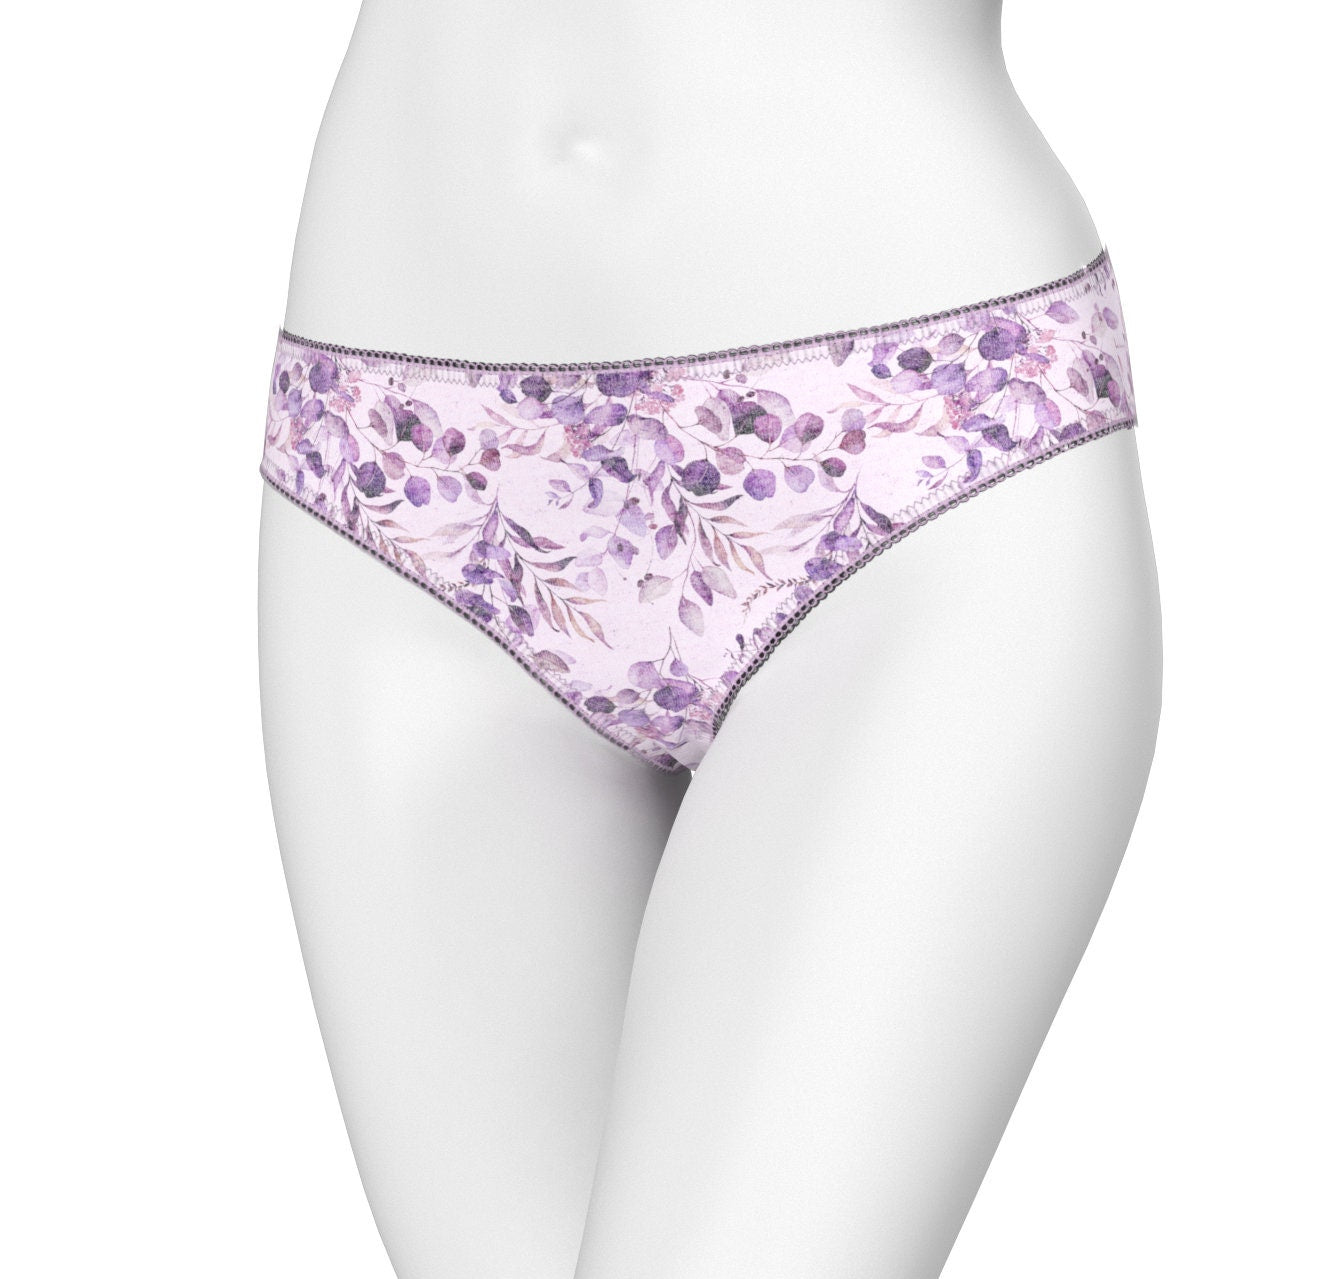 Downloadable PDF "Anna" Hipster Panty Sewing Pattern, Sizes XS-L